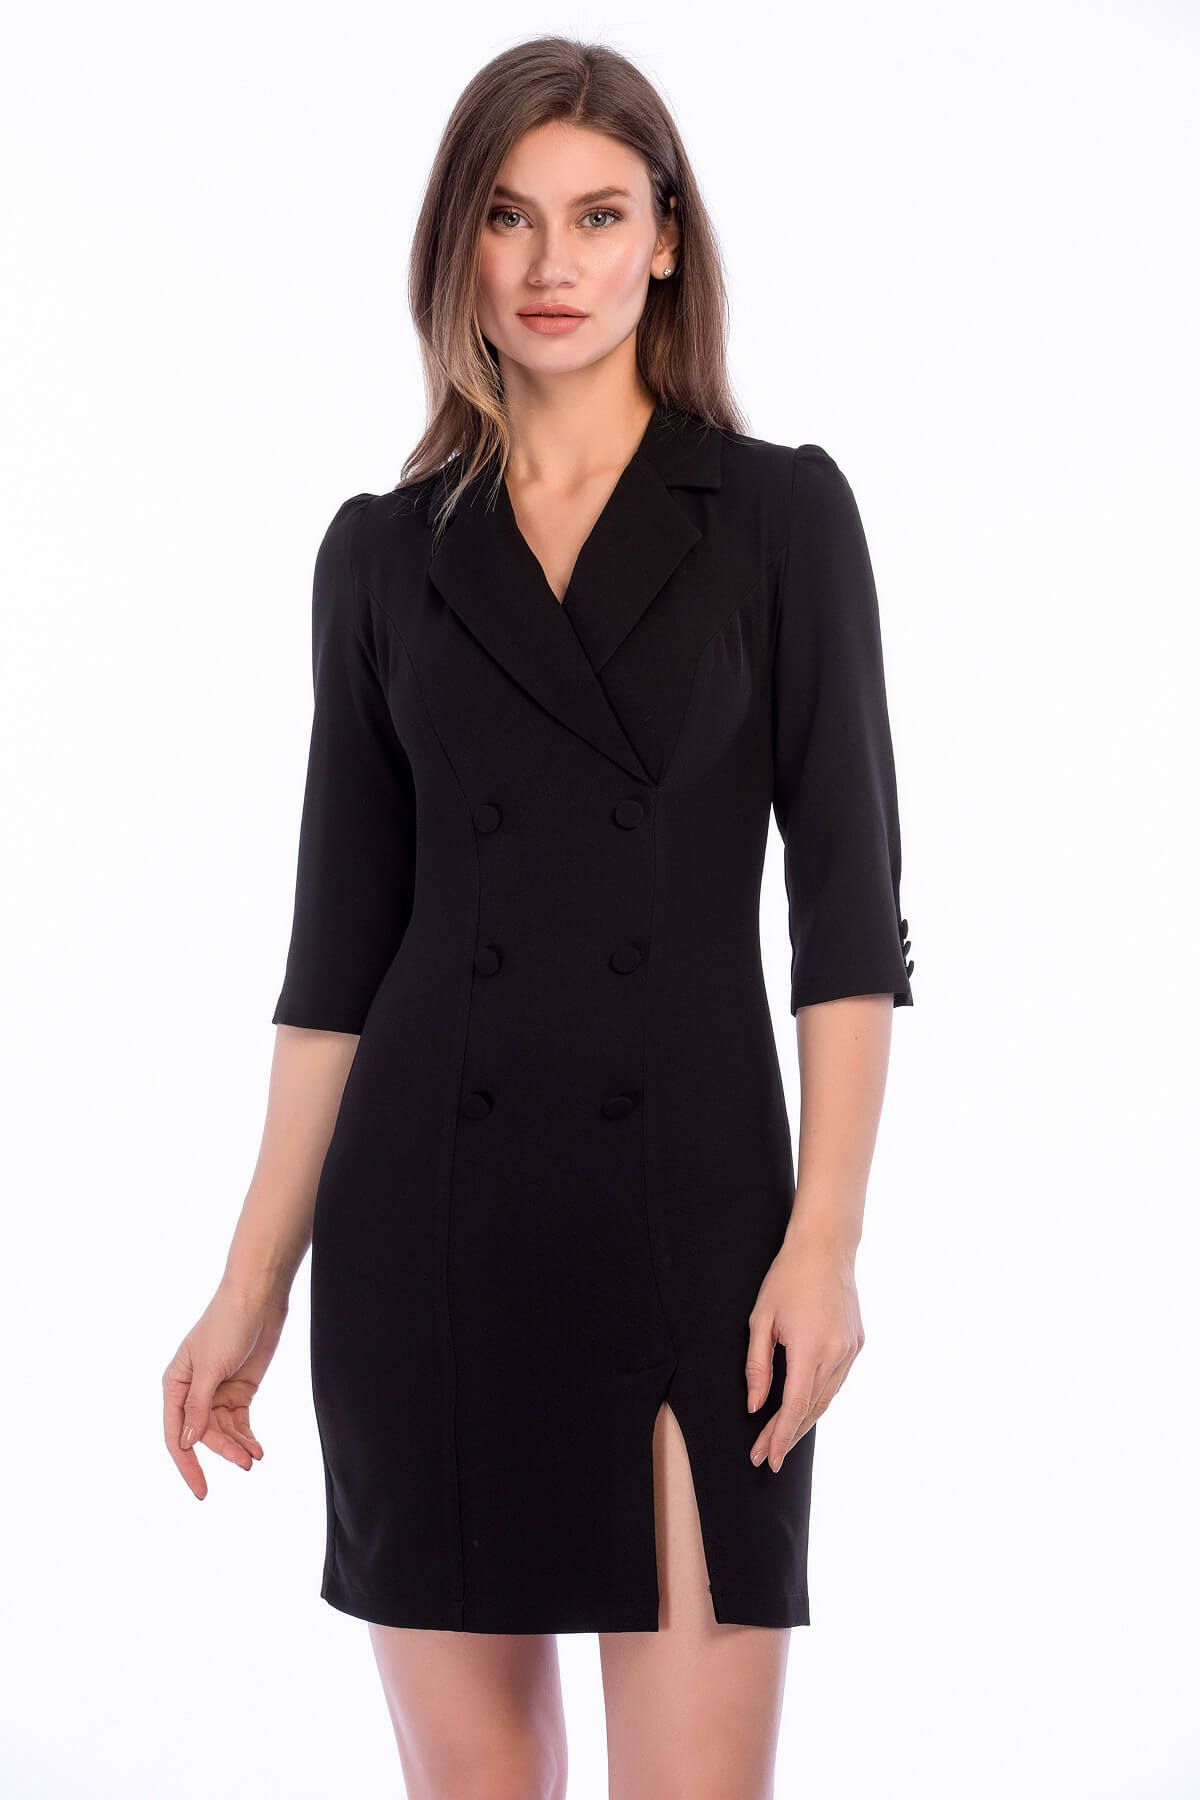 İroni Kadın Siyah Blazer Elbise 5154-891